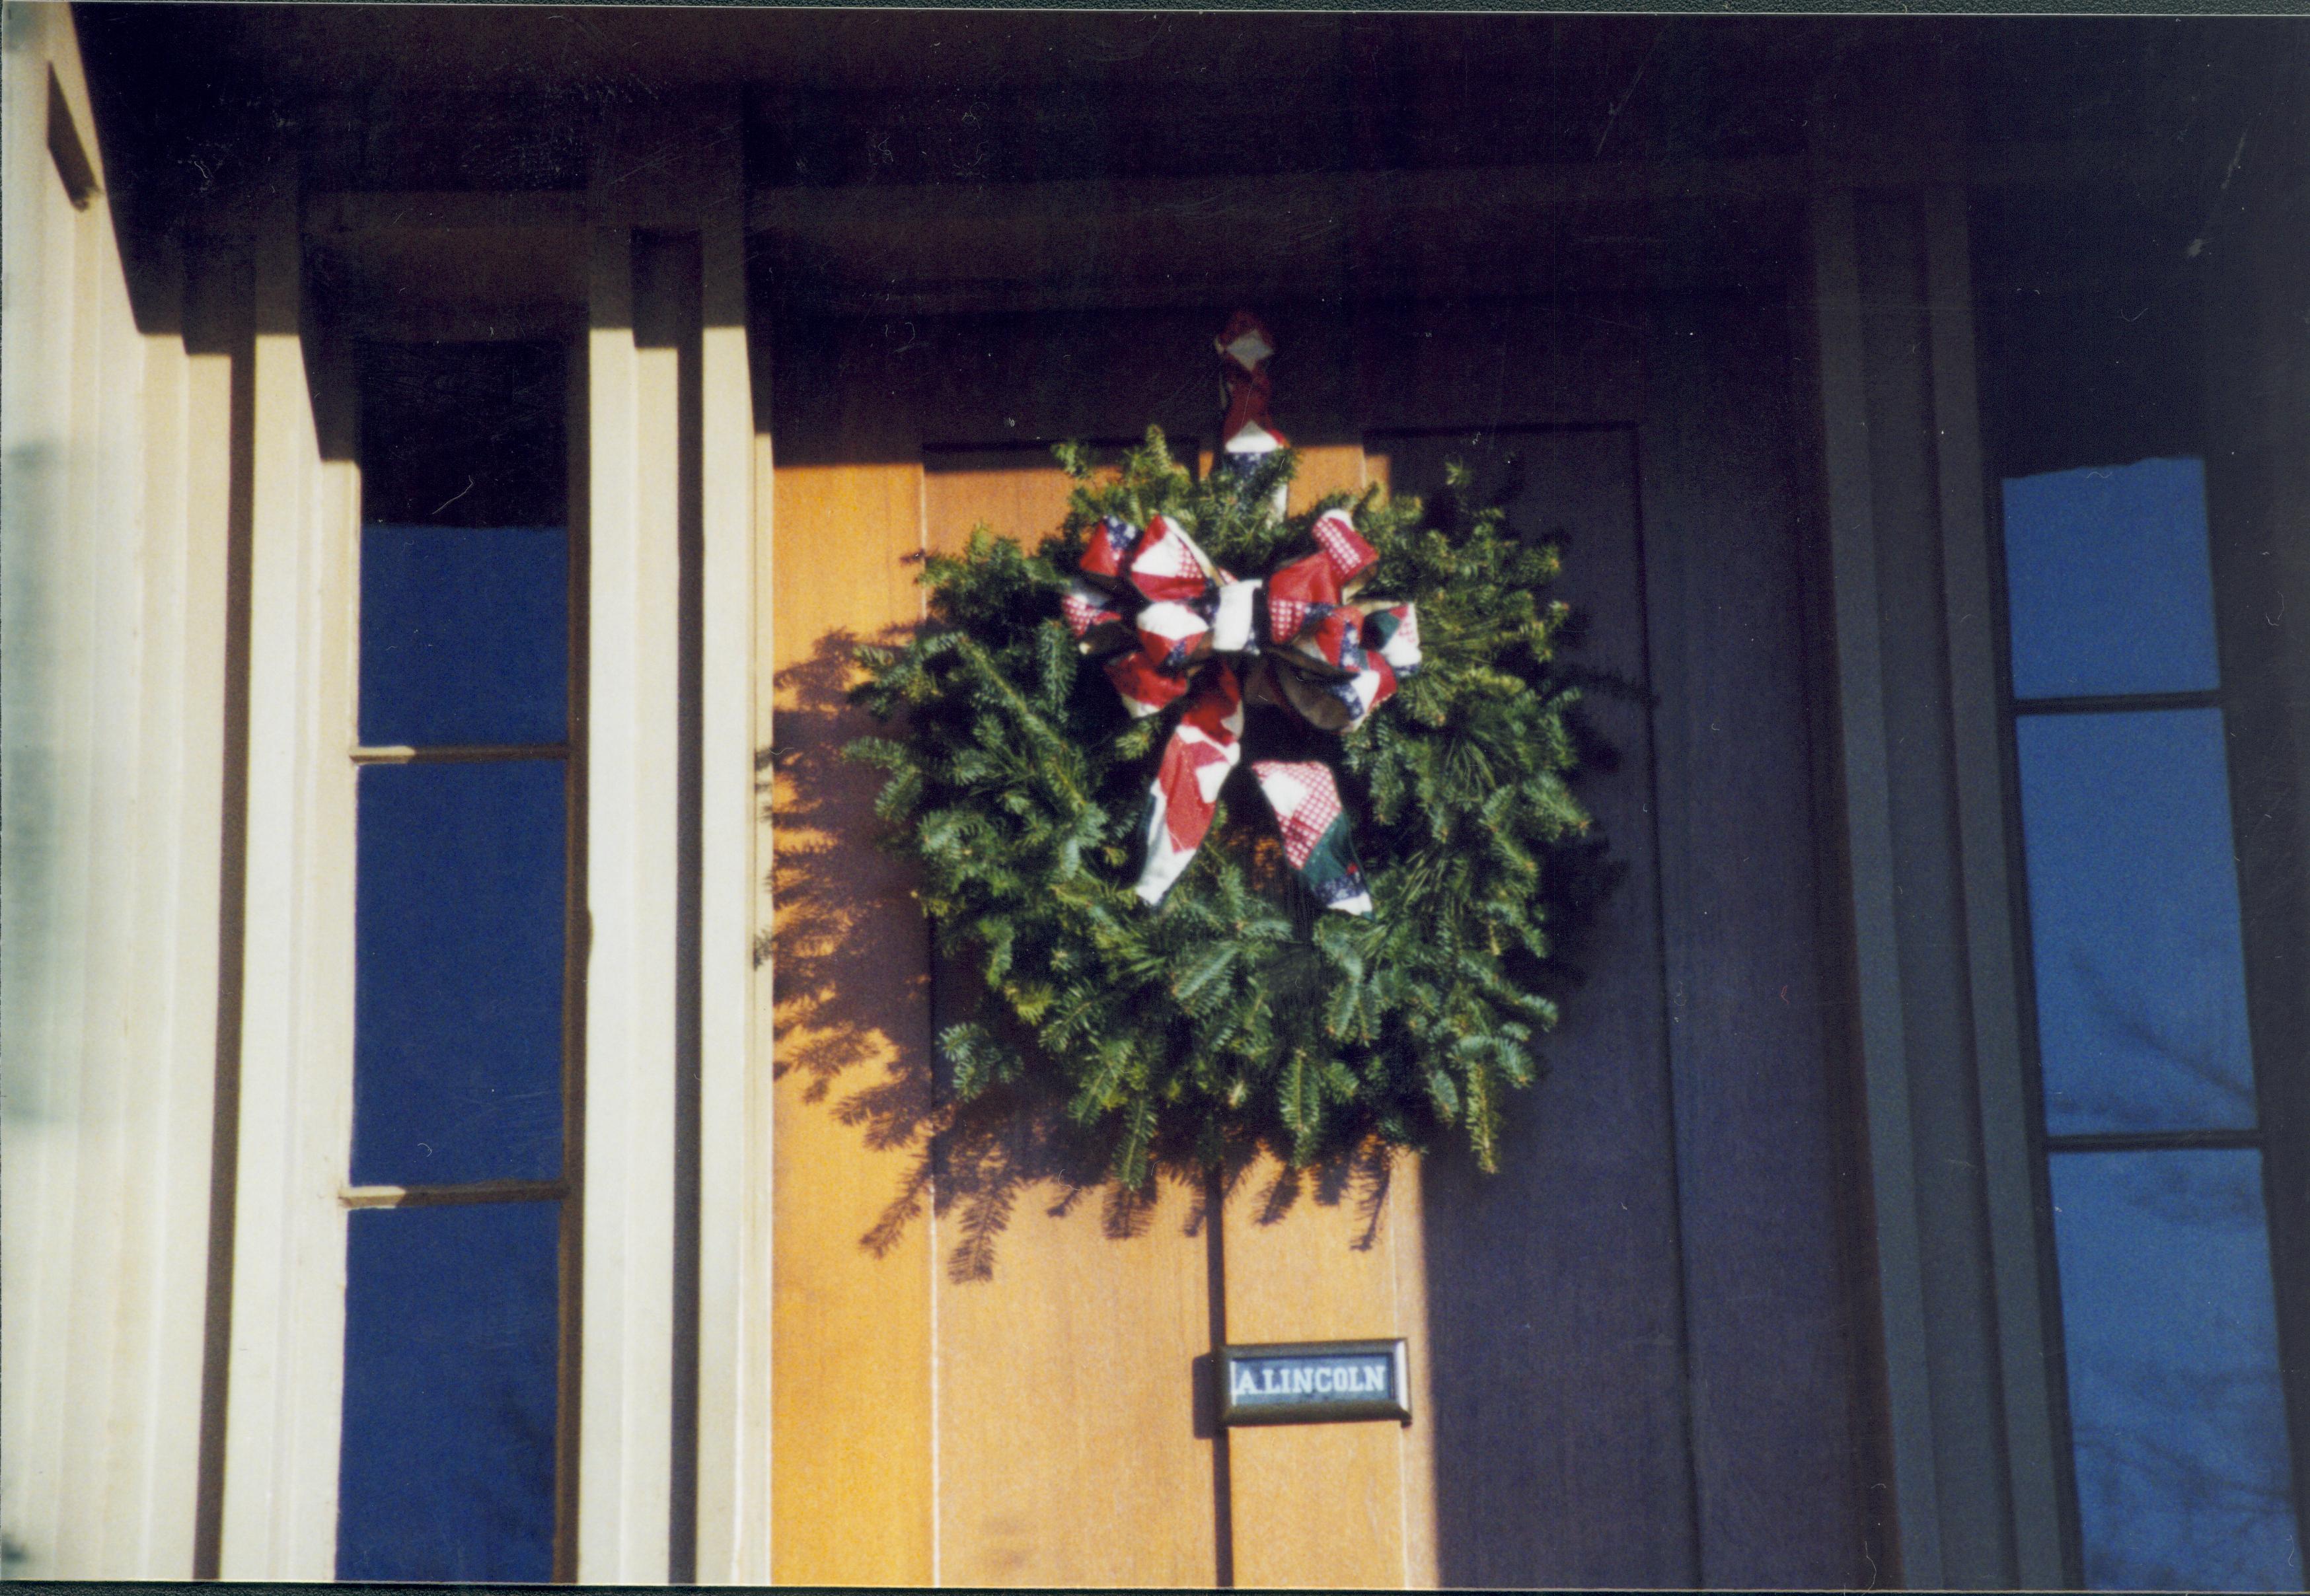 Wreath on door of Lincoln Home Lincoln Home NHS- Christmas in Lincoln Neighborhood 2000, HS-01 2000-10 Christmas, decorations, neighborhood